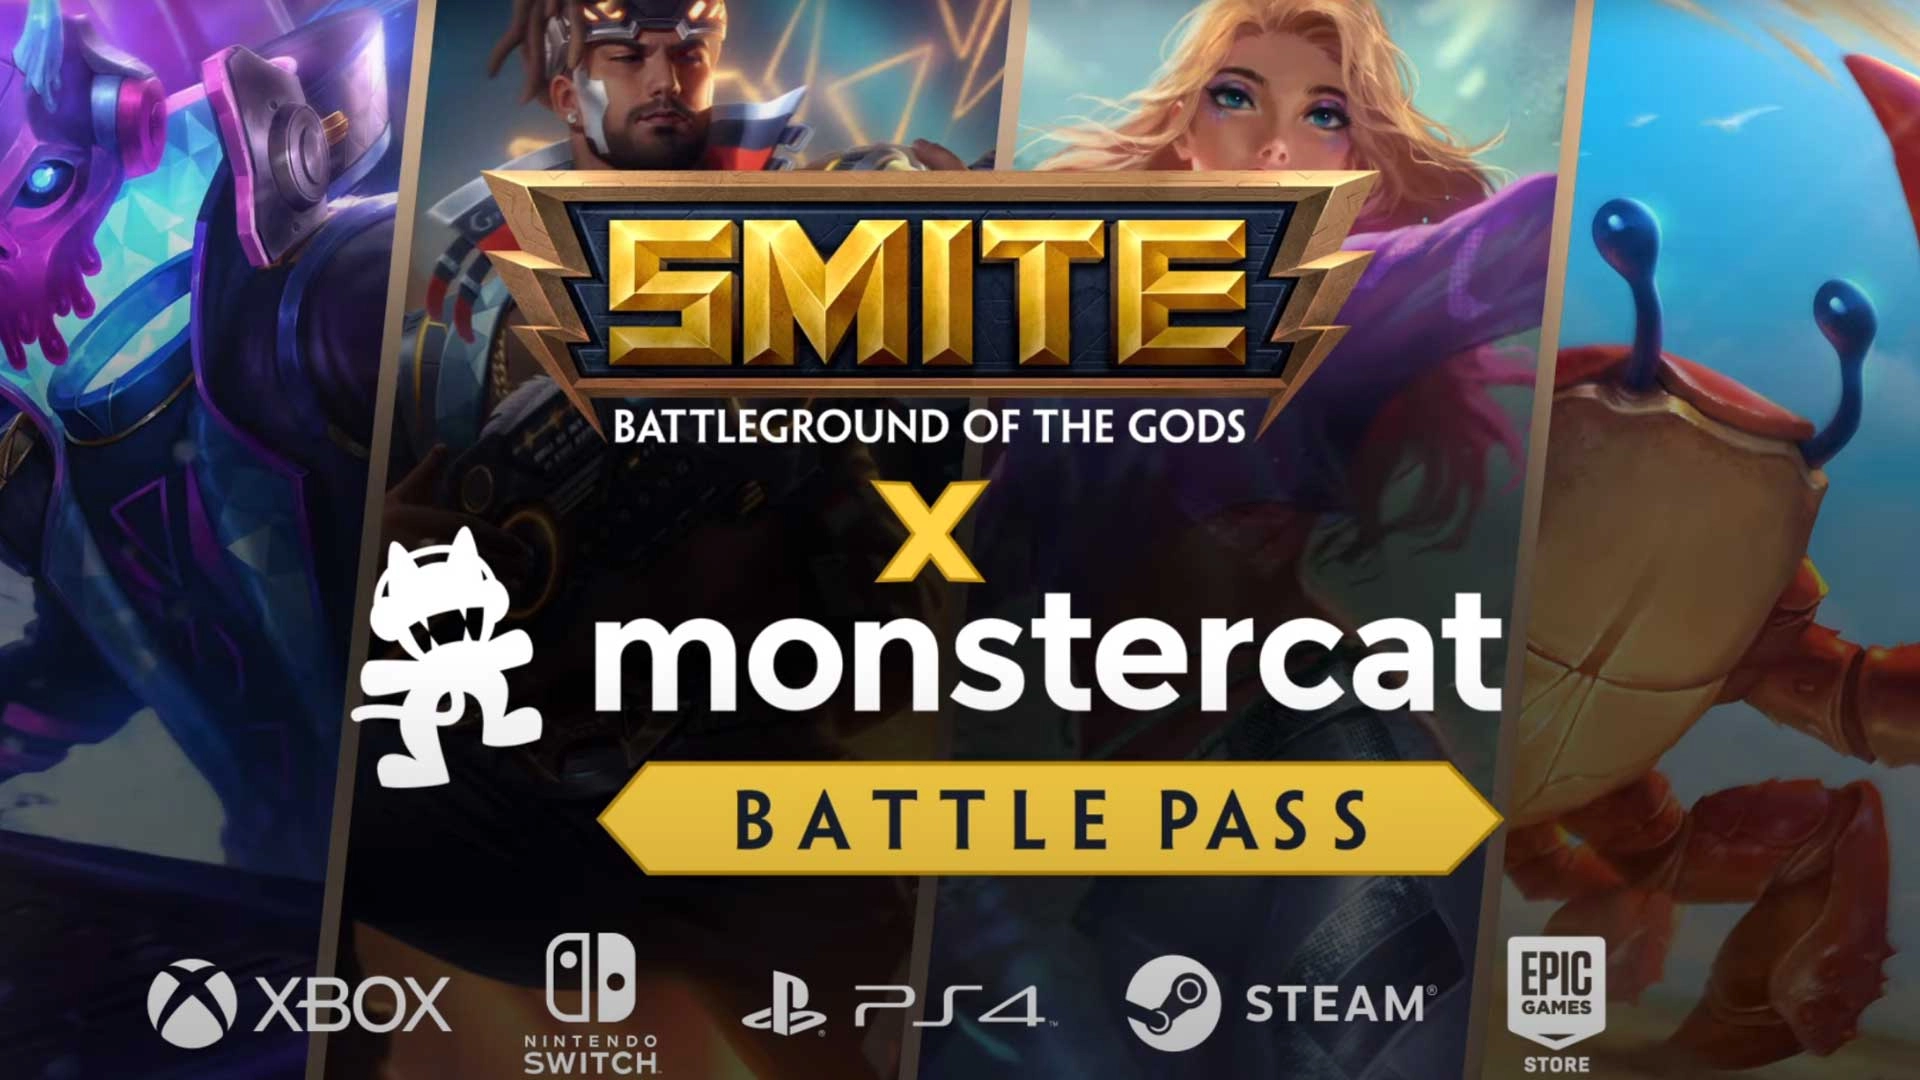 Smite Monstercat Battle Pass